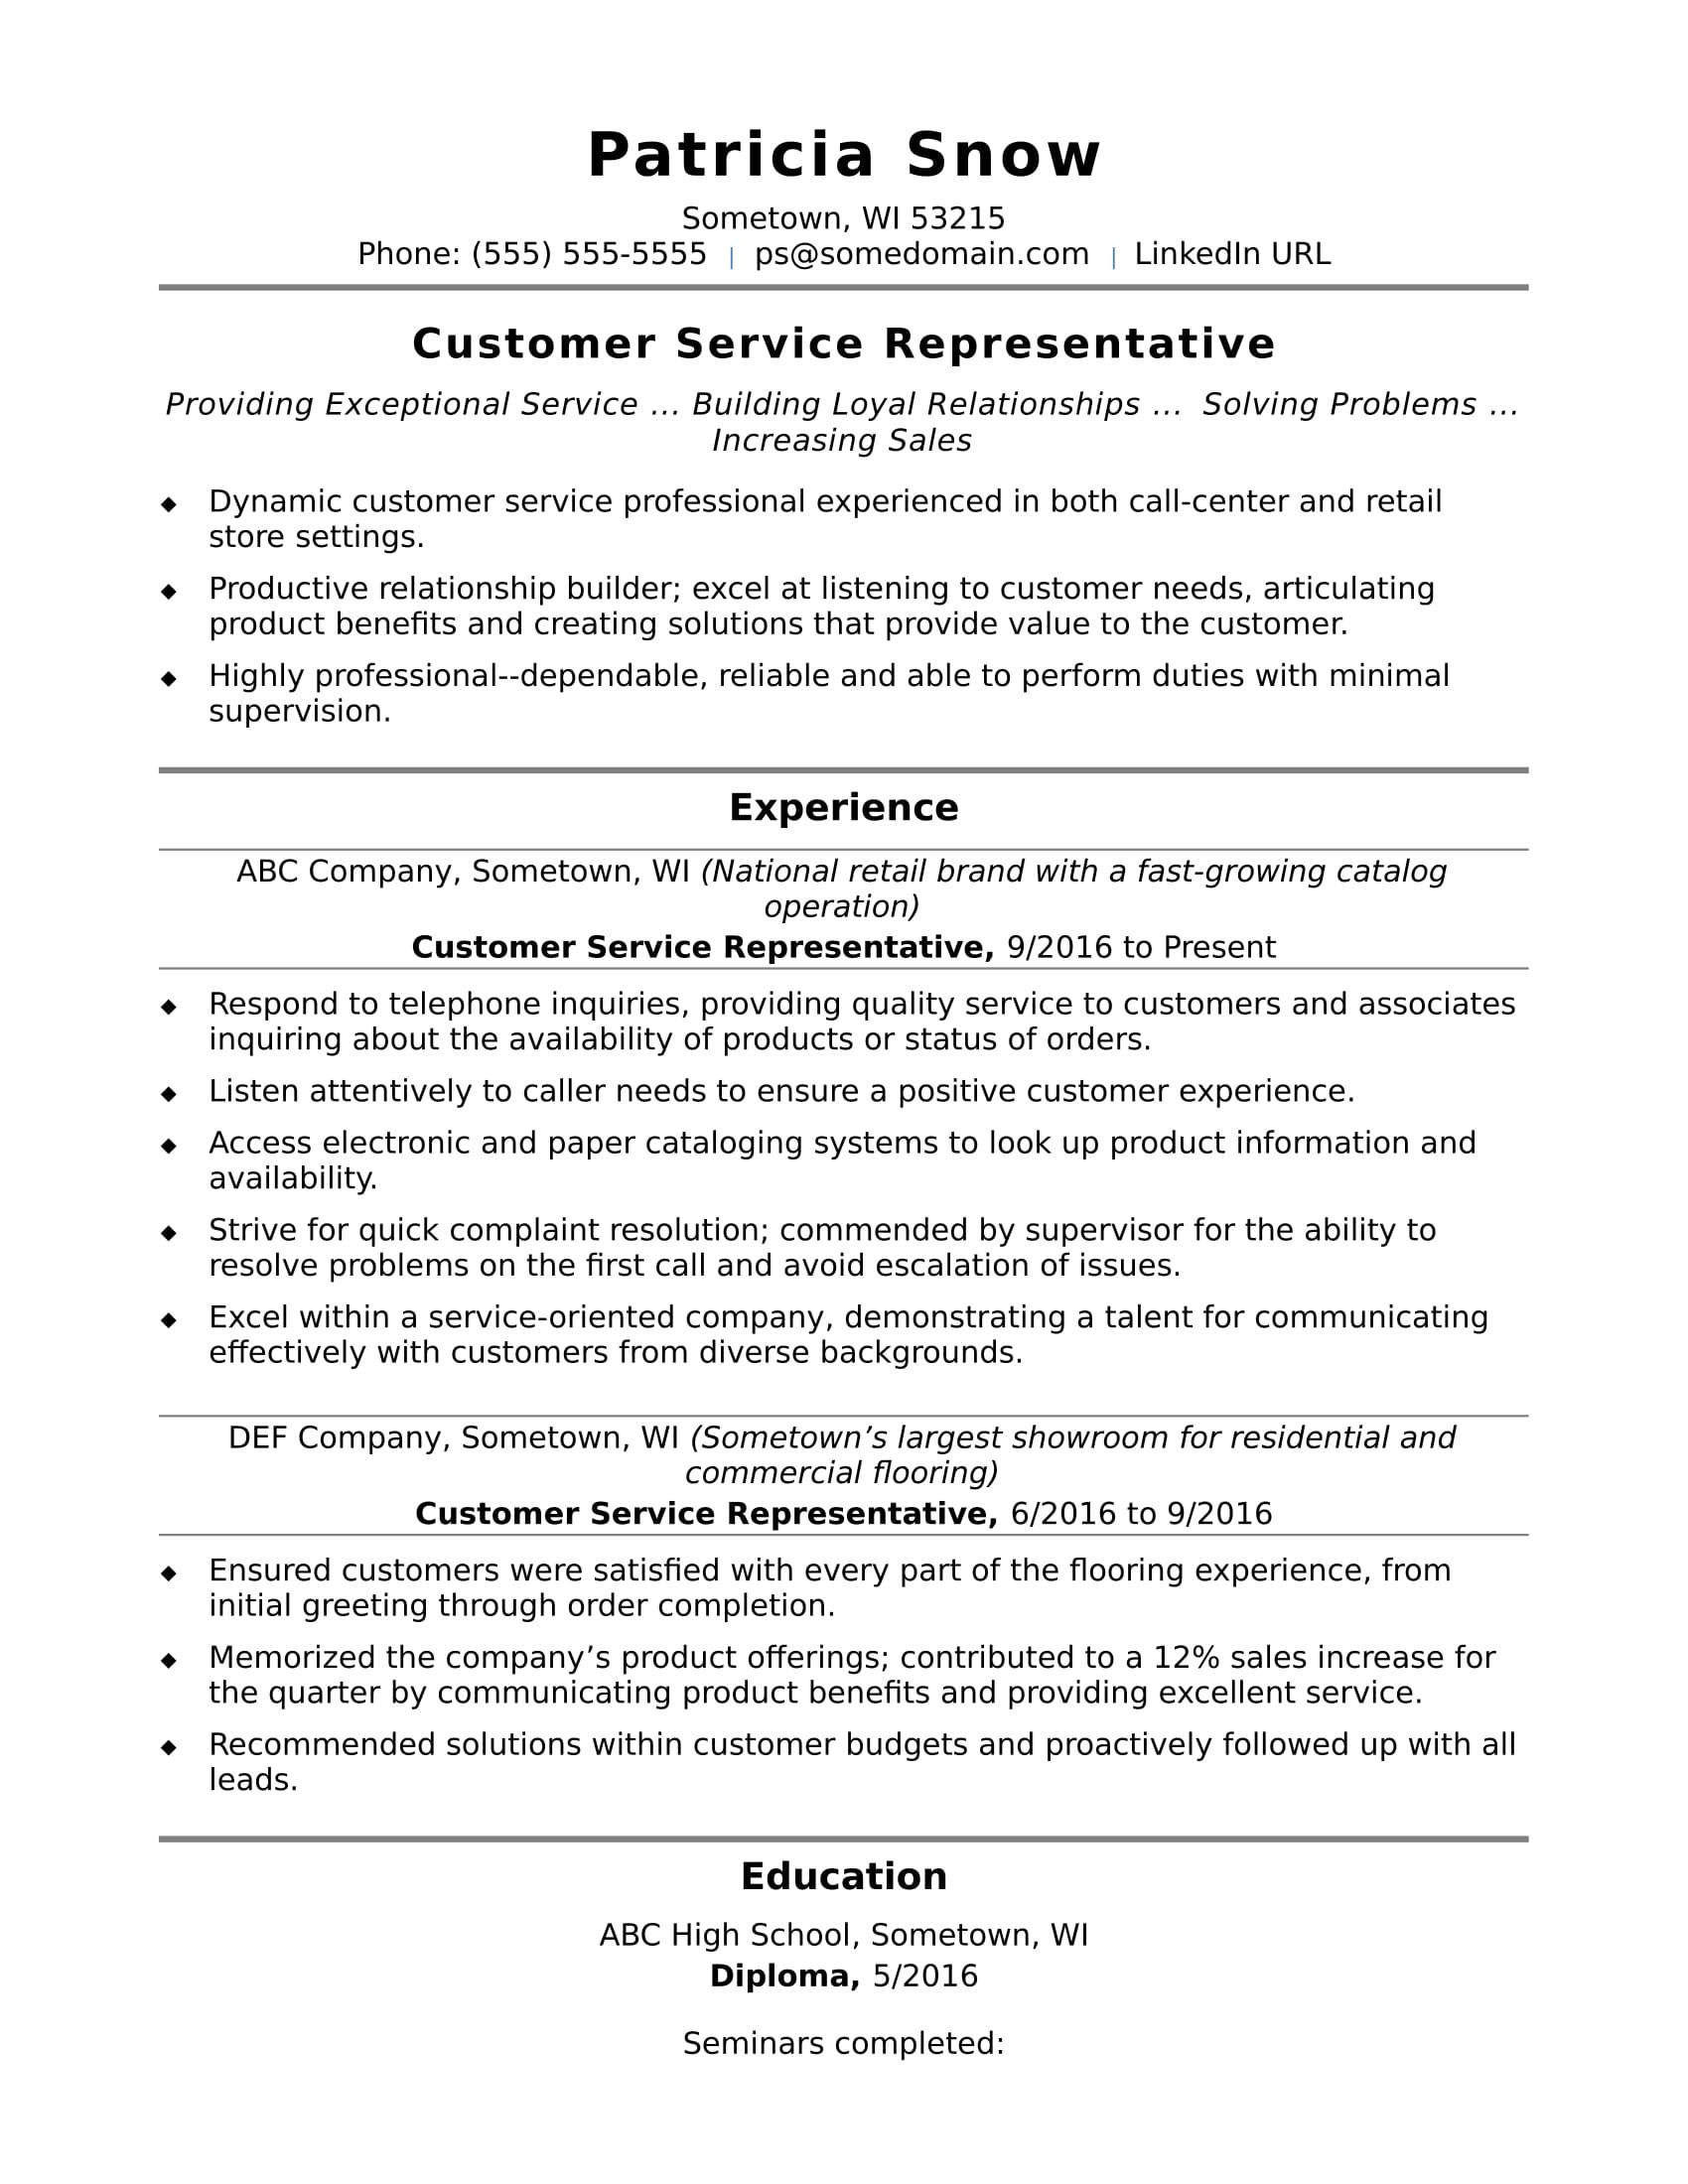 Free Resume Templates for Customer Service Jobs Customer Service Representative Resume Sample Monster.com